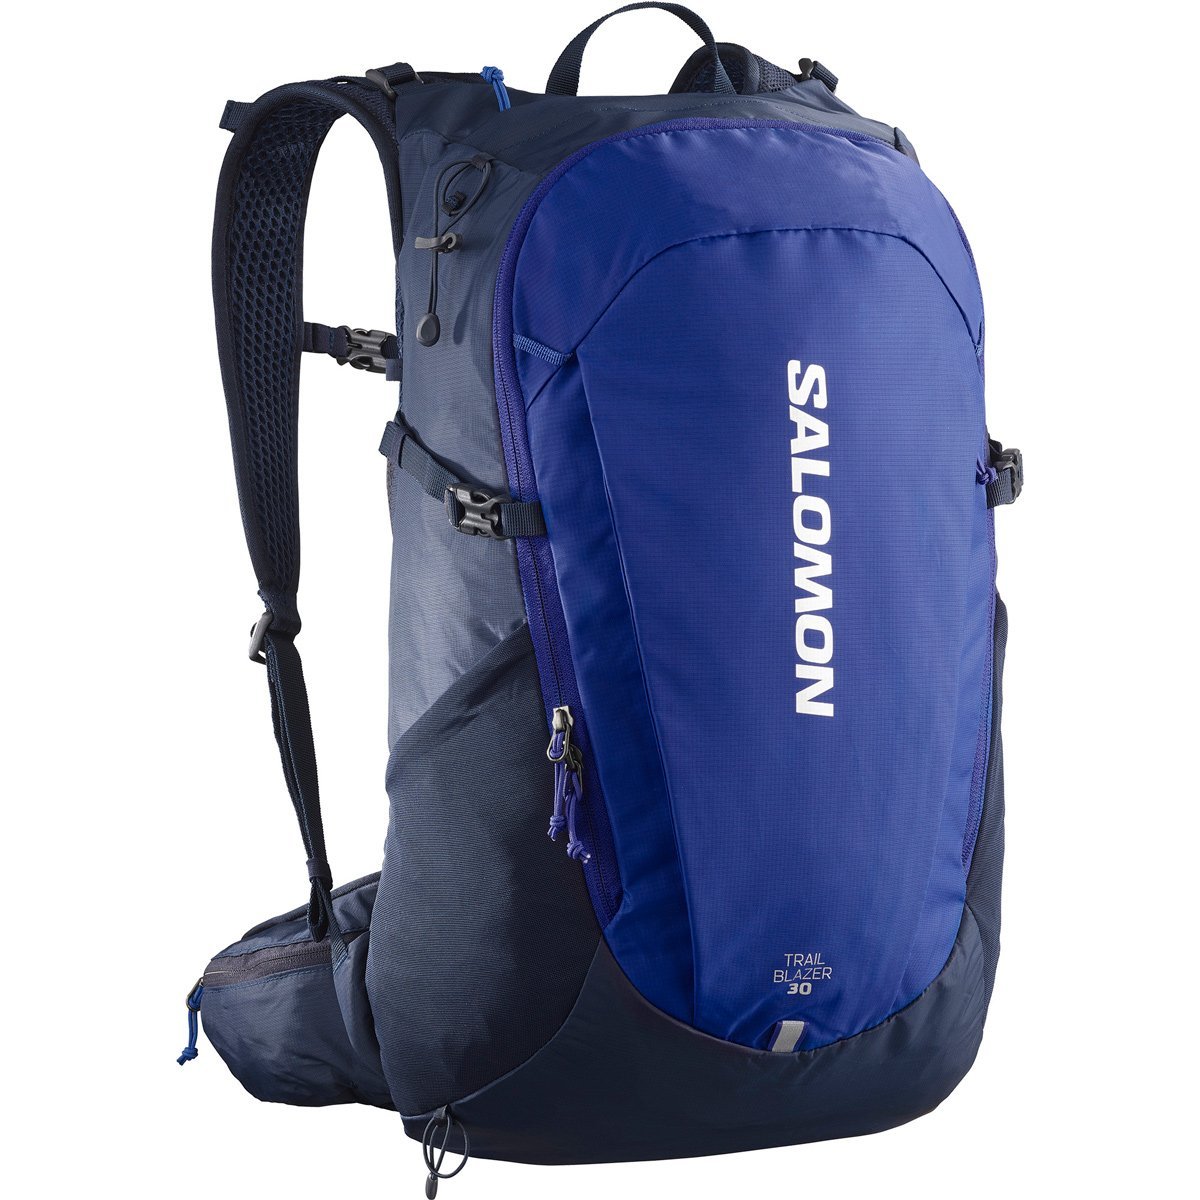 Salomon Trailblazer 30 Hiking Rygsæk, blå